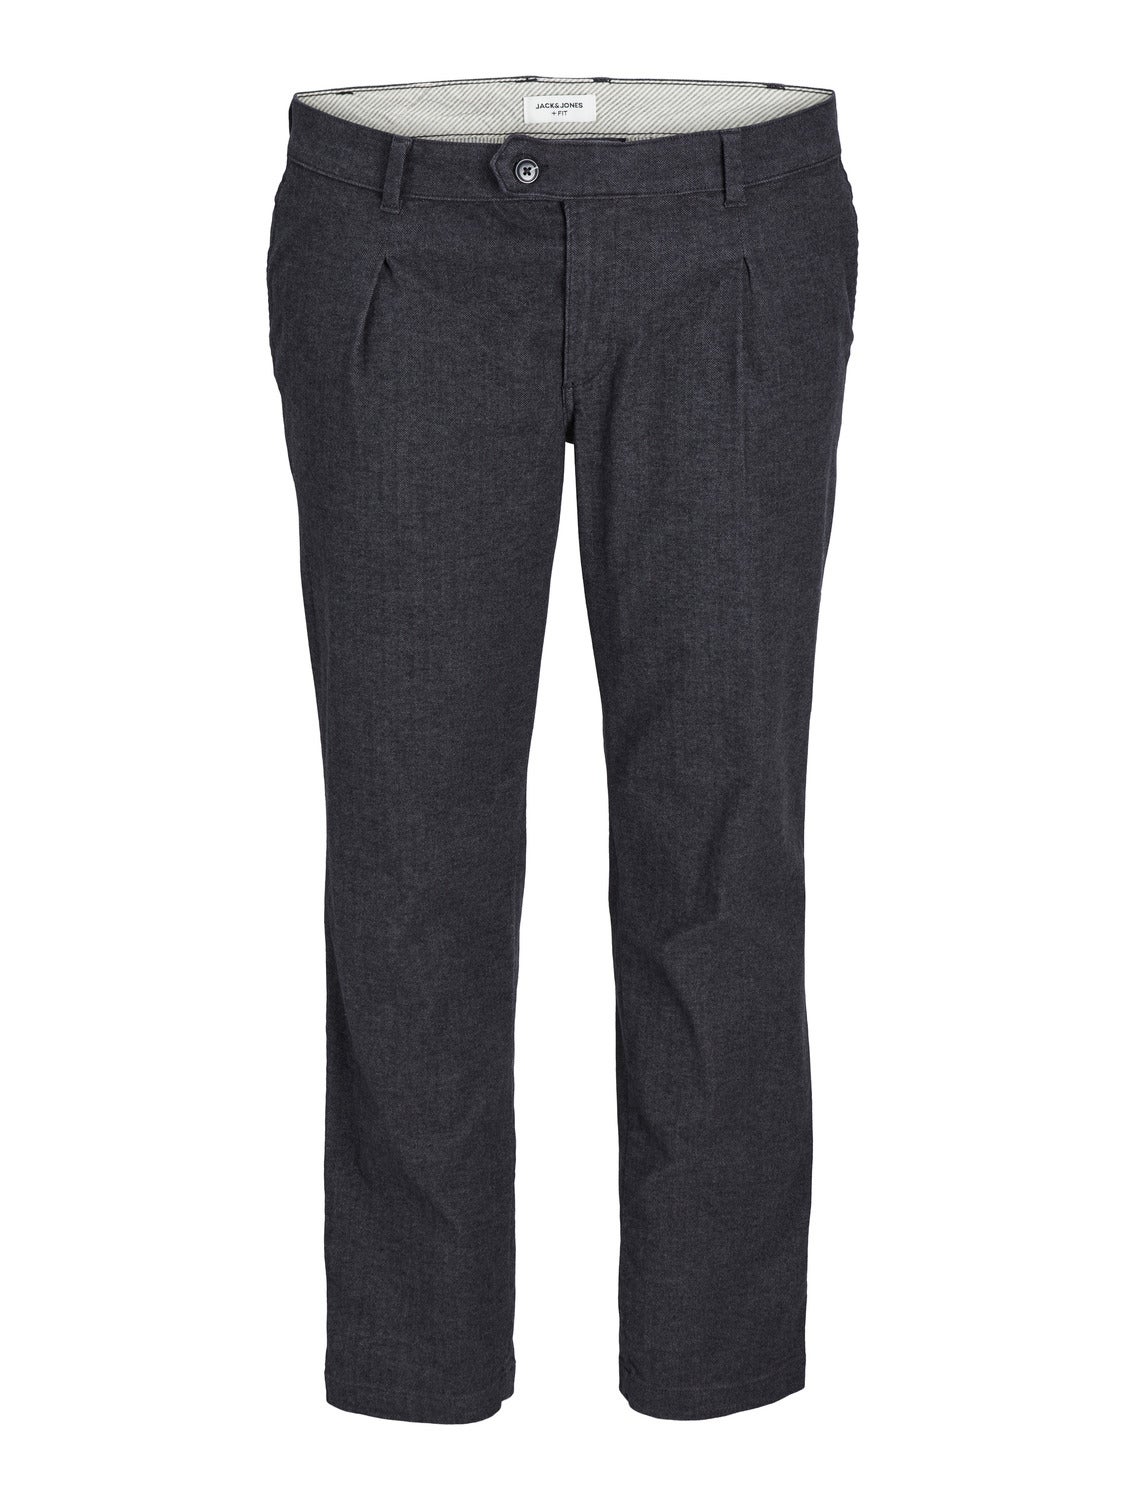 Juebong Men's Cotton Cargo Pants Classic Plus Size Trousers Casual  Wear-resistant Overalls Trousers with Button-pocket, 3X-Large, Black -  Walmart.com